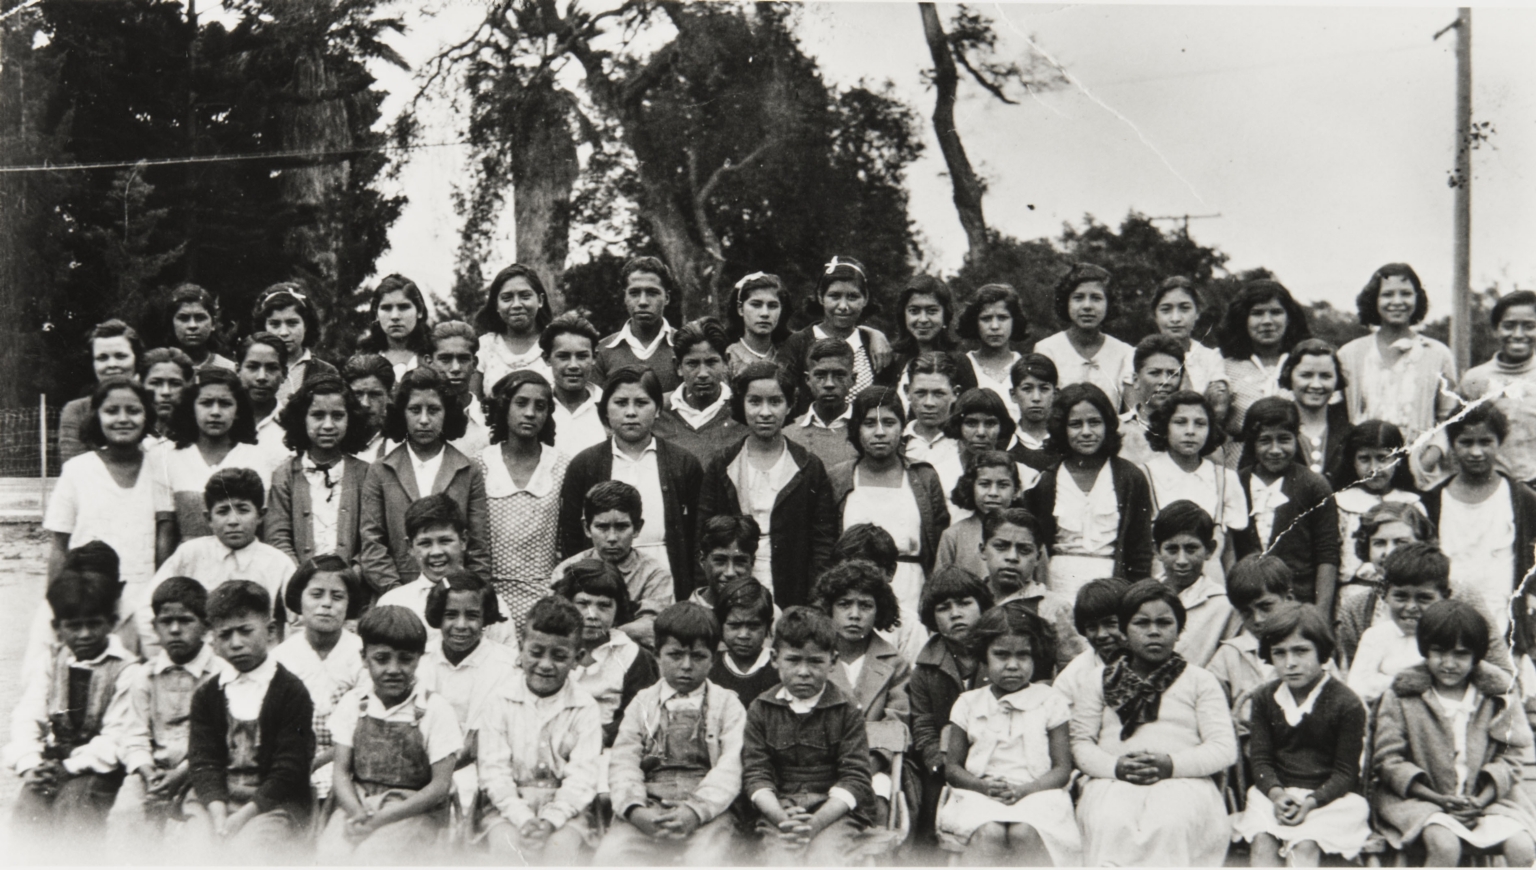 Class portrait at the "Mexican School" in Carpinteria.